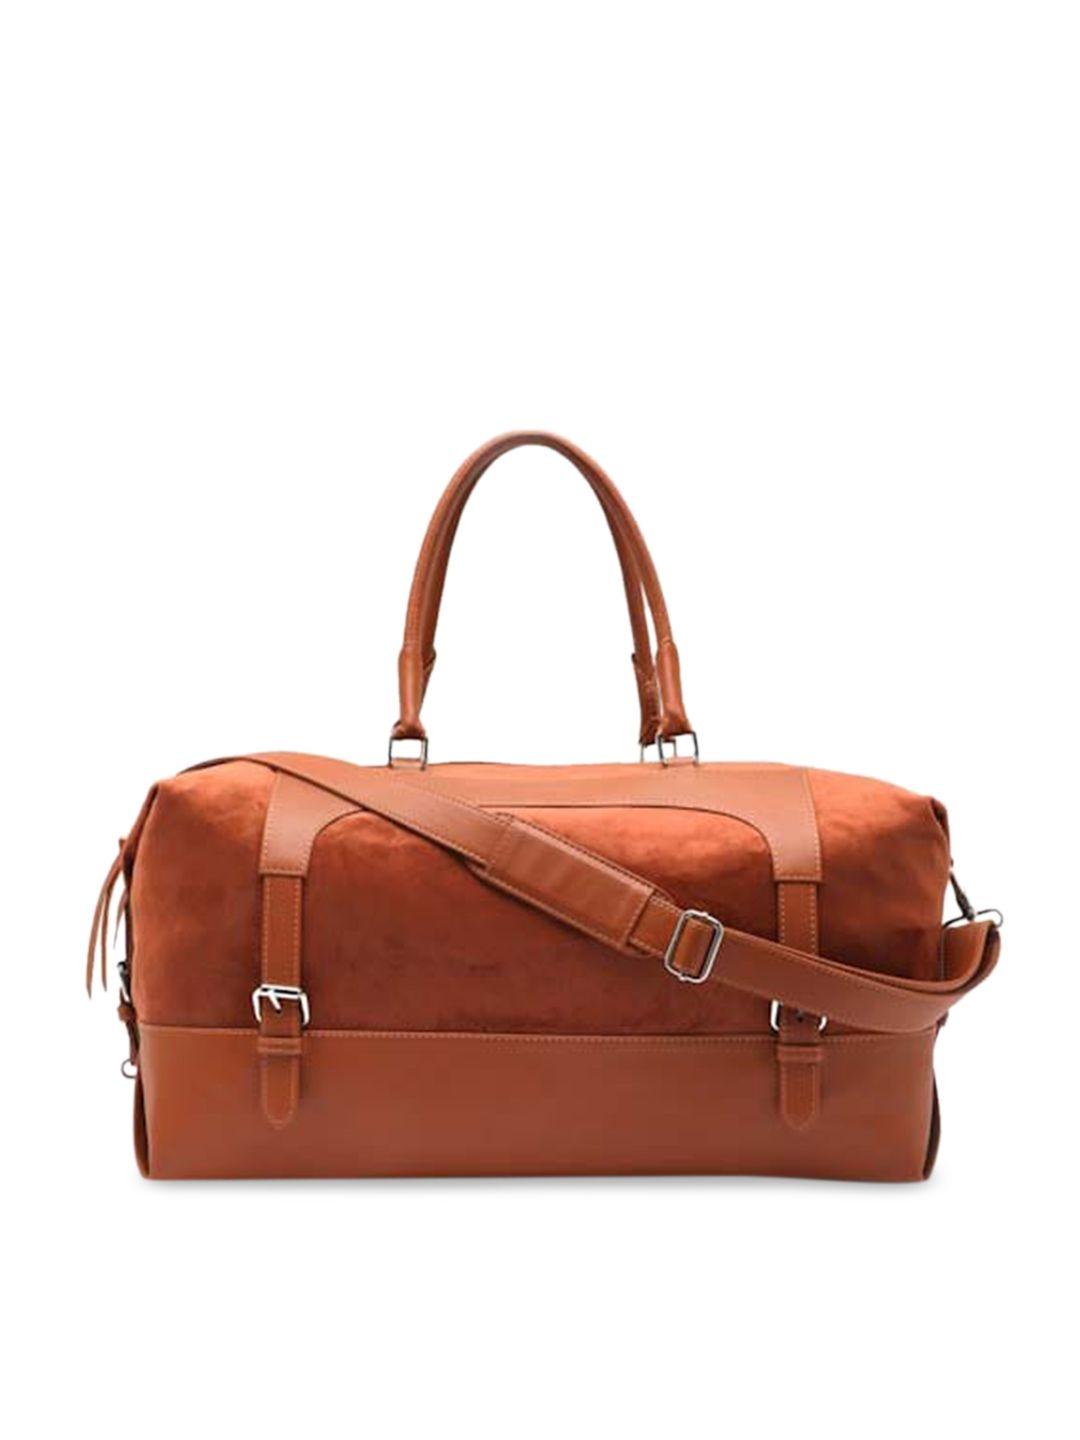 clotche rust brown pu structured handheld bag